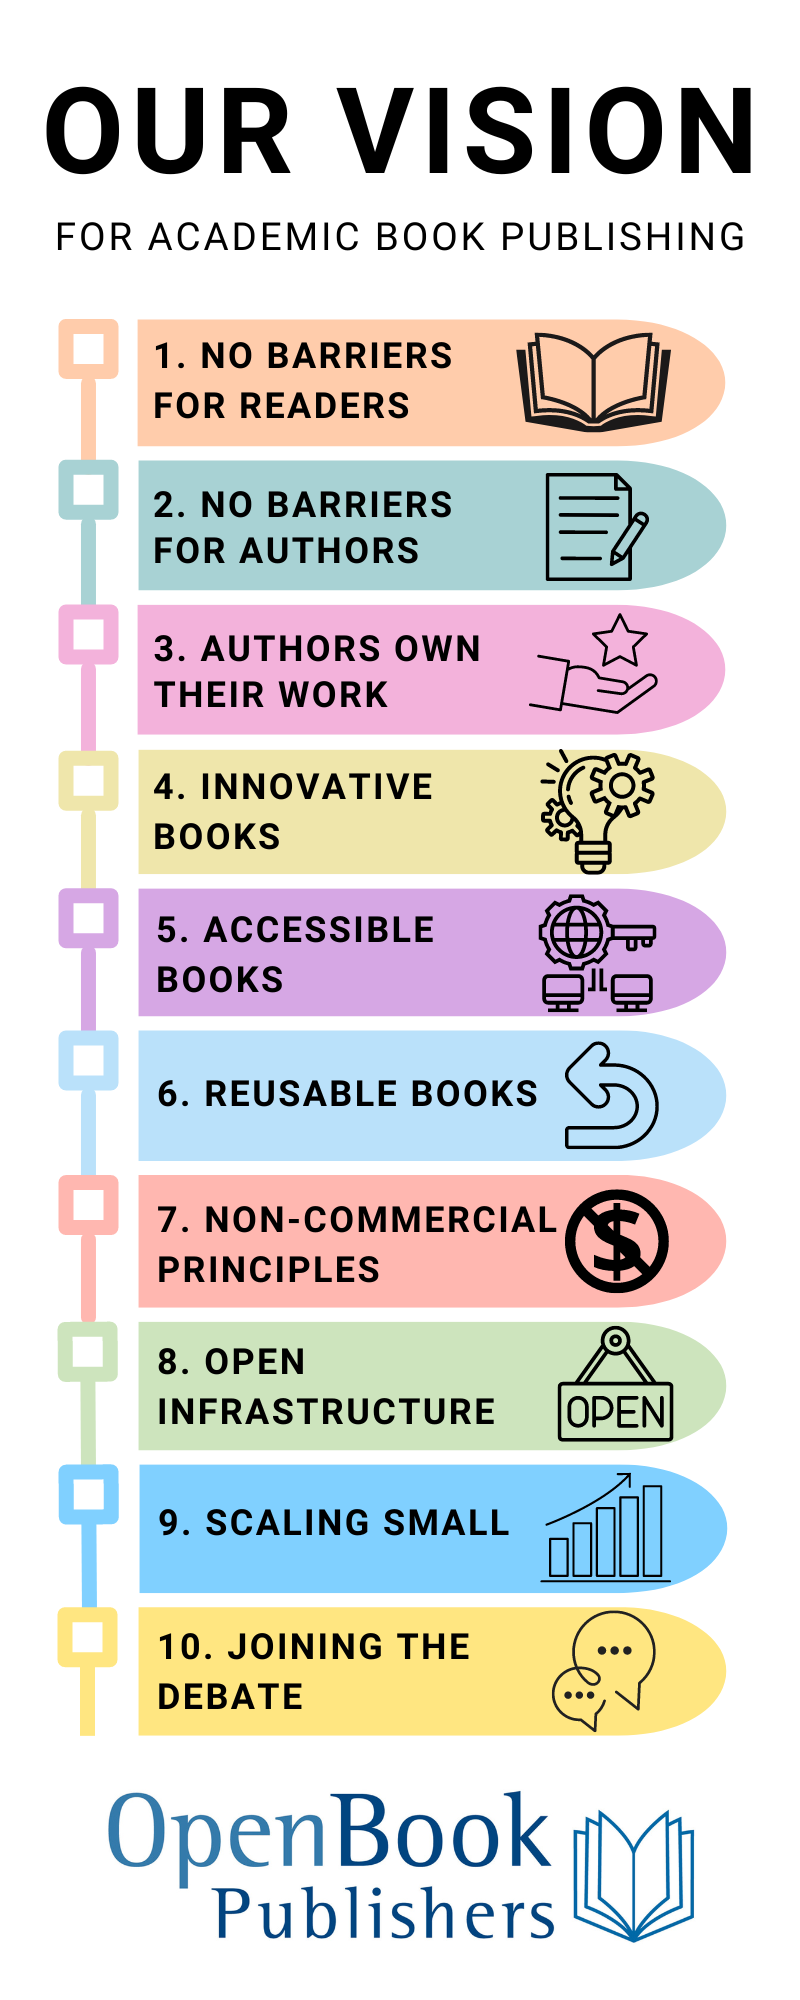 OBP's ten principles for OA book publishing